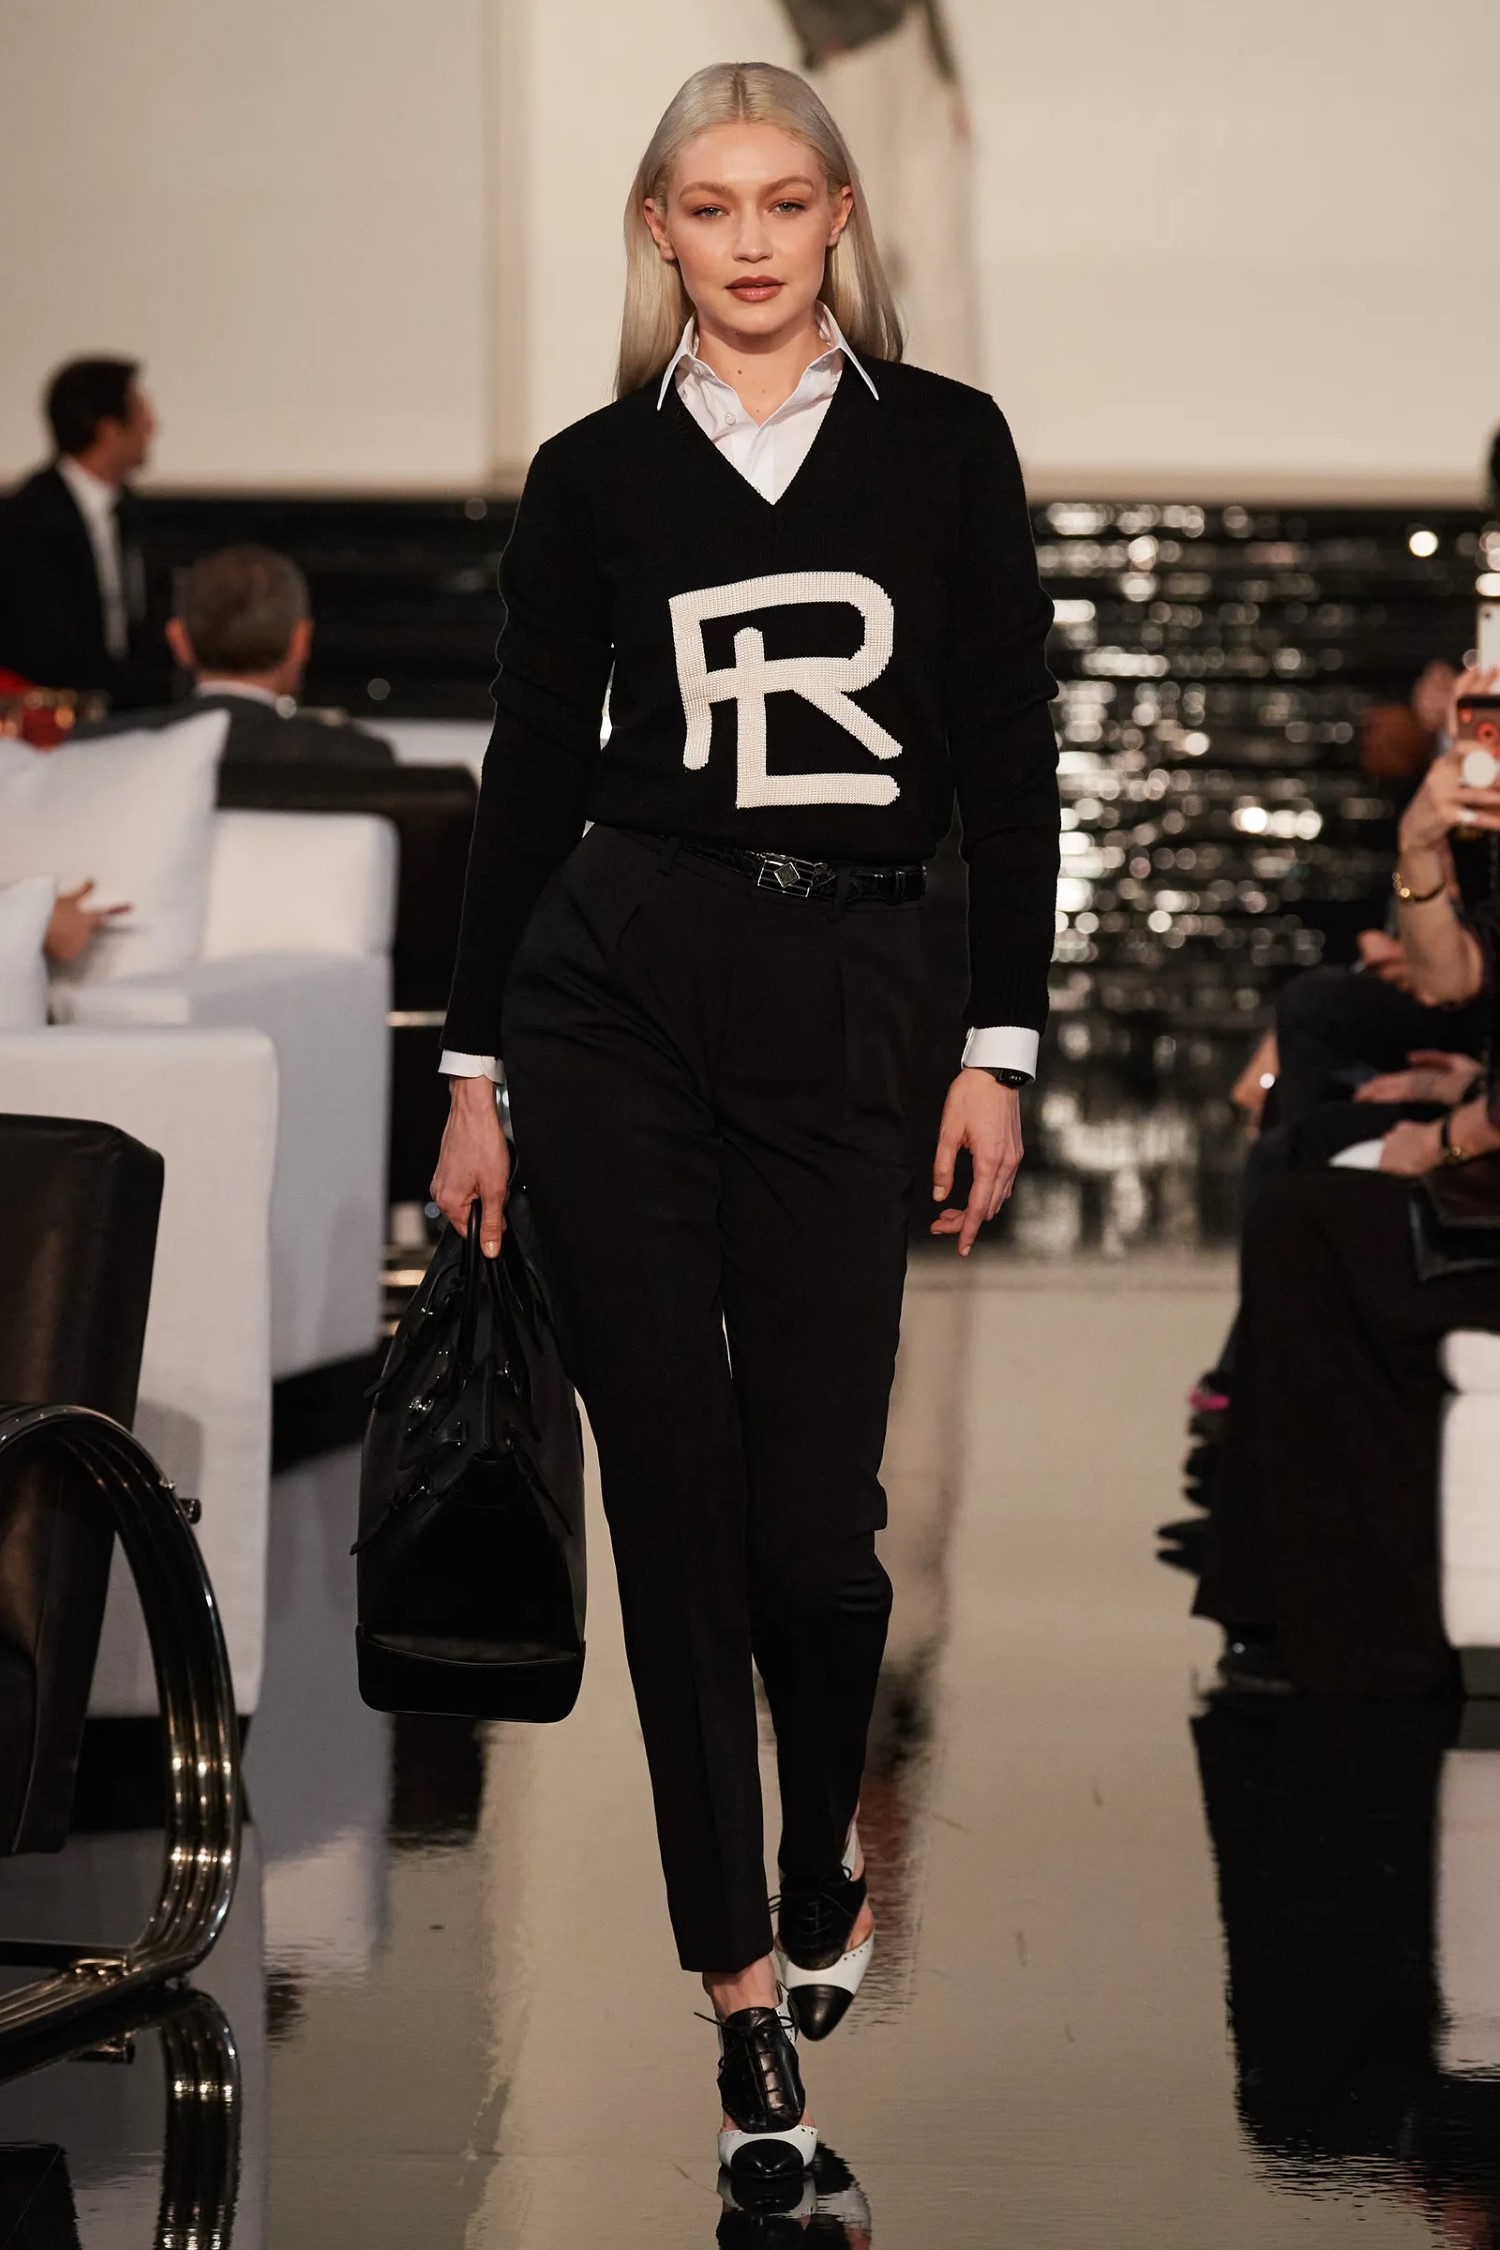 Lauren Ralph Lauren Resort 2022 Campaign French-Inspired Outfits